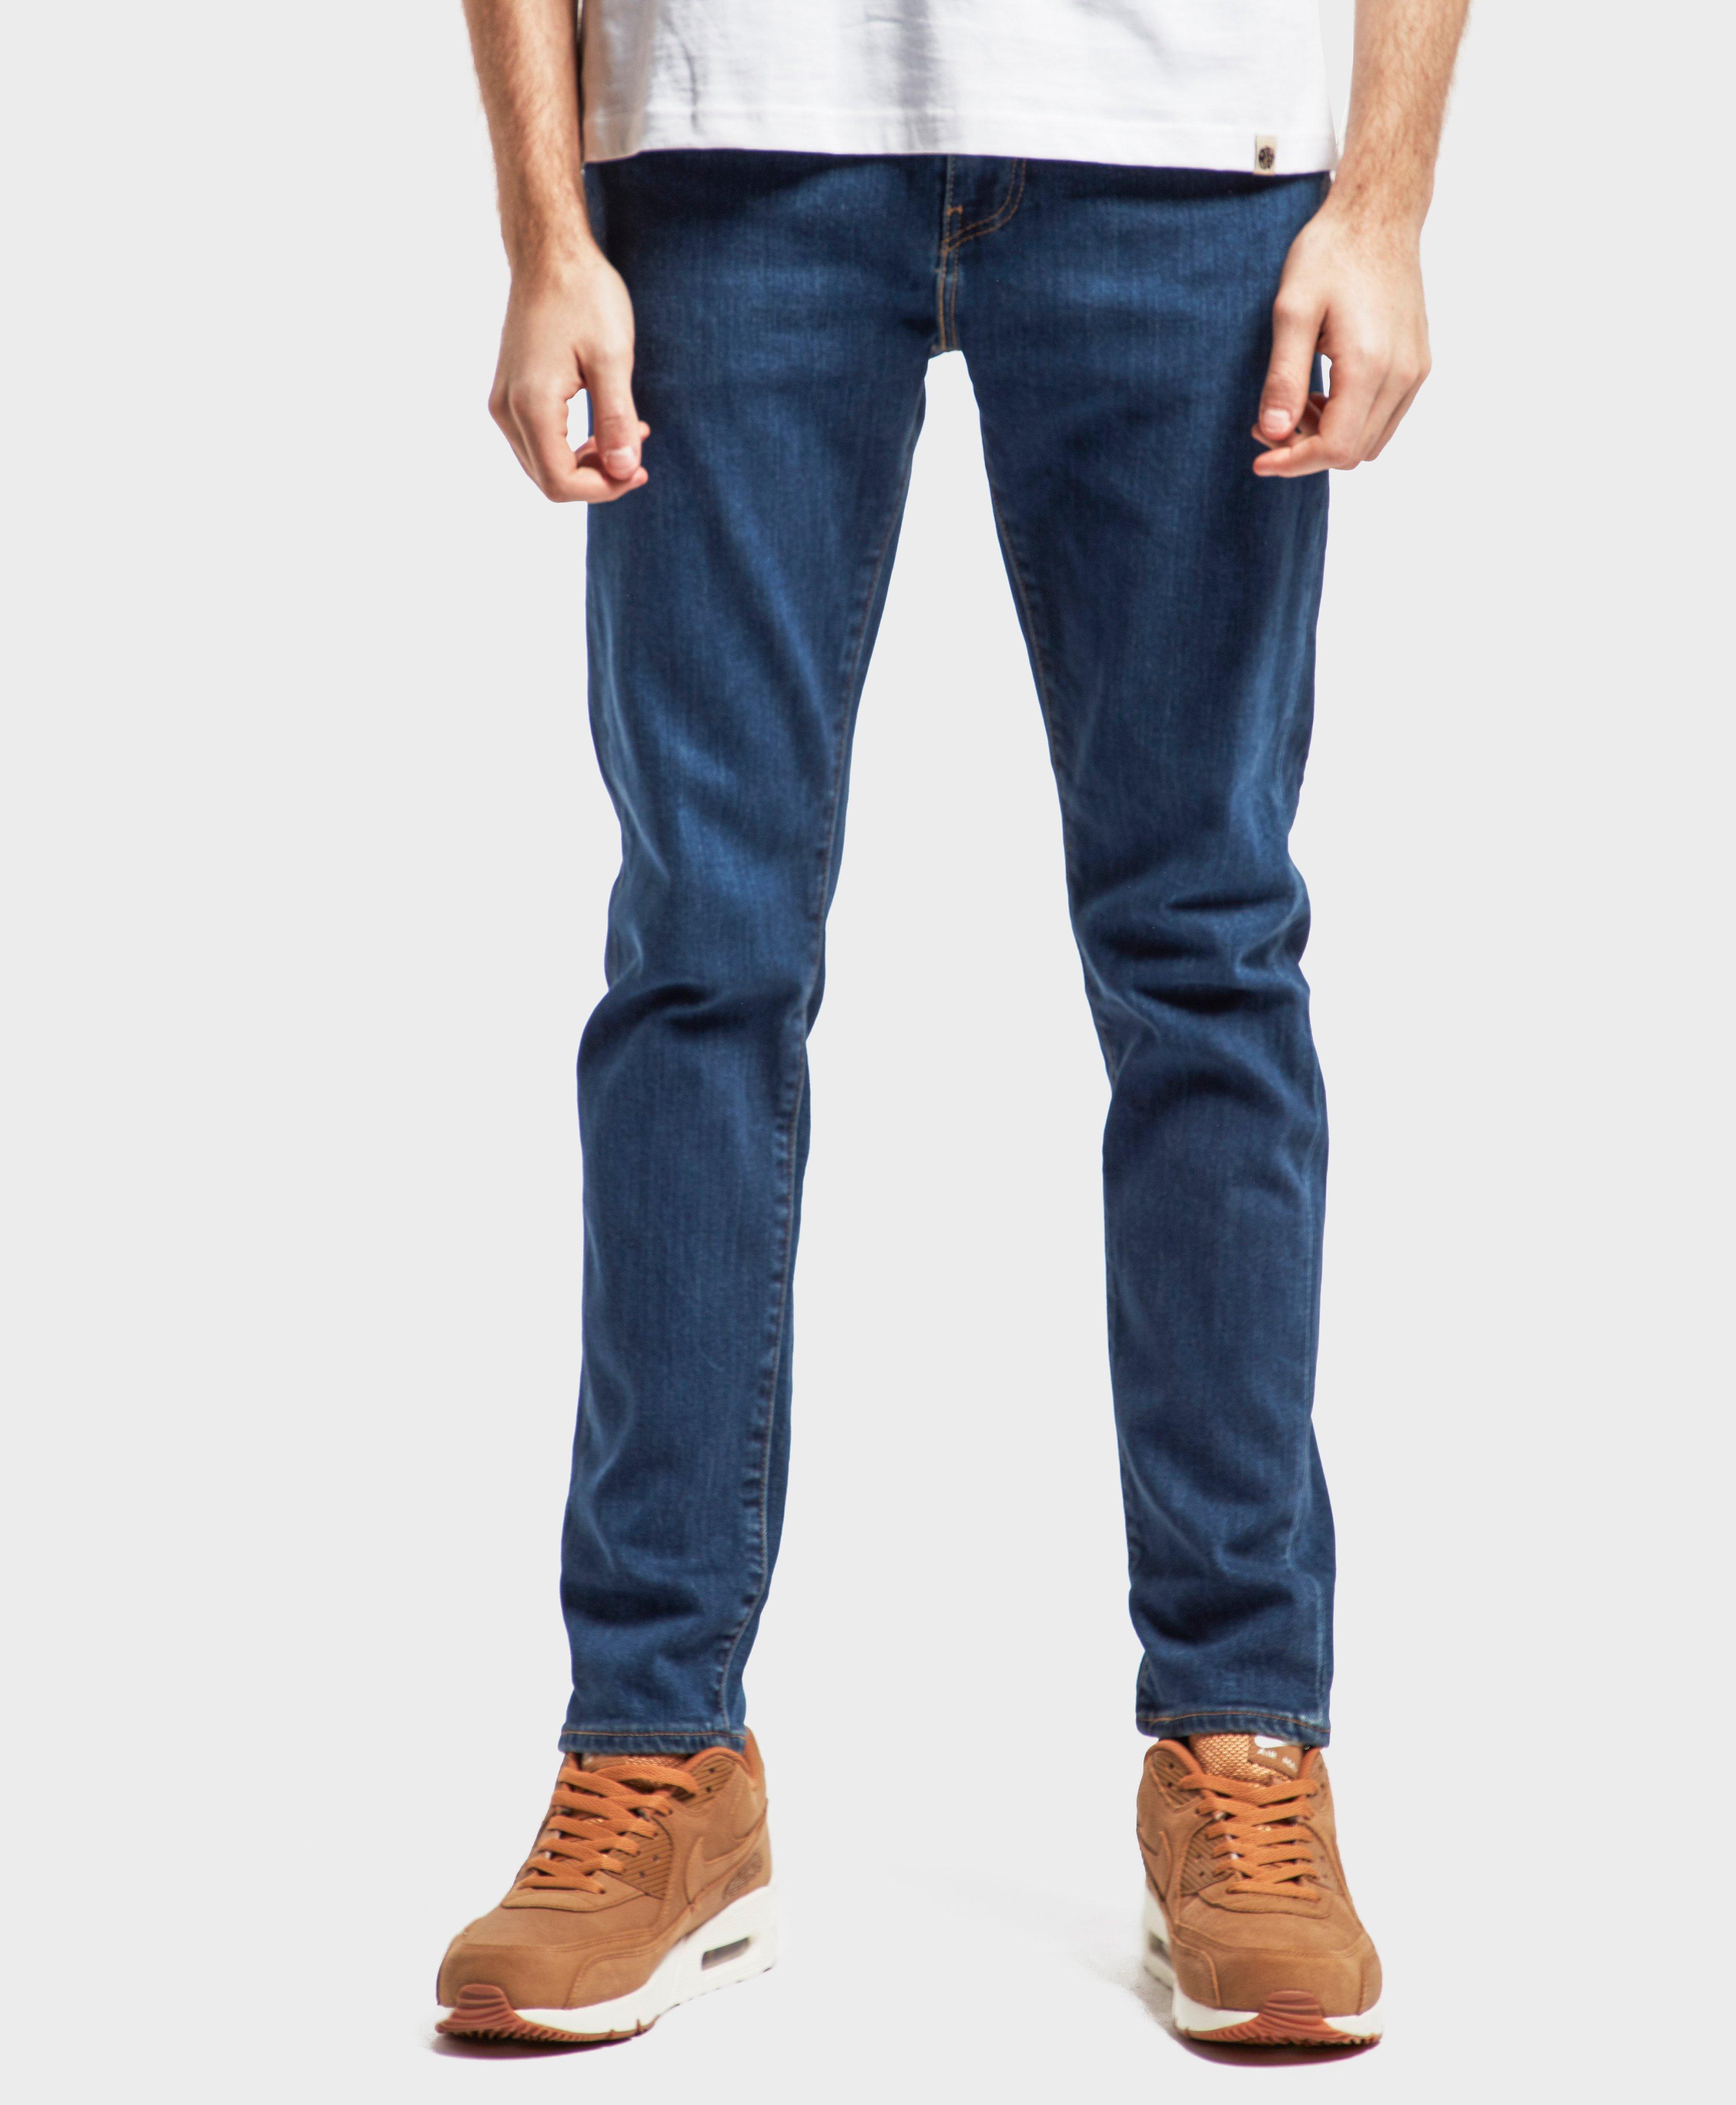 Levi's Denim 510 Skinny Jeans in Blue for Men - Lyst